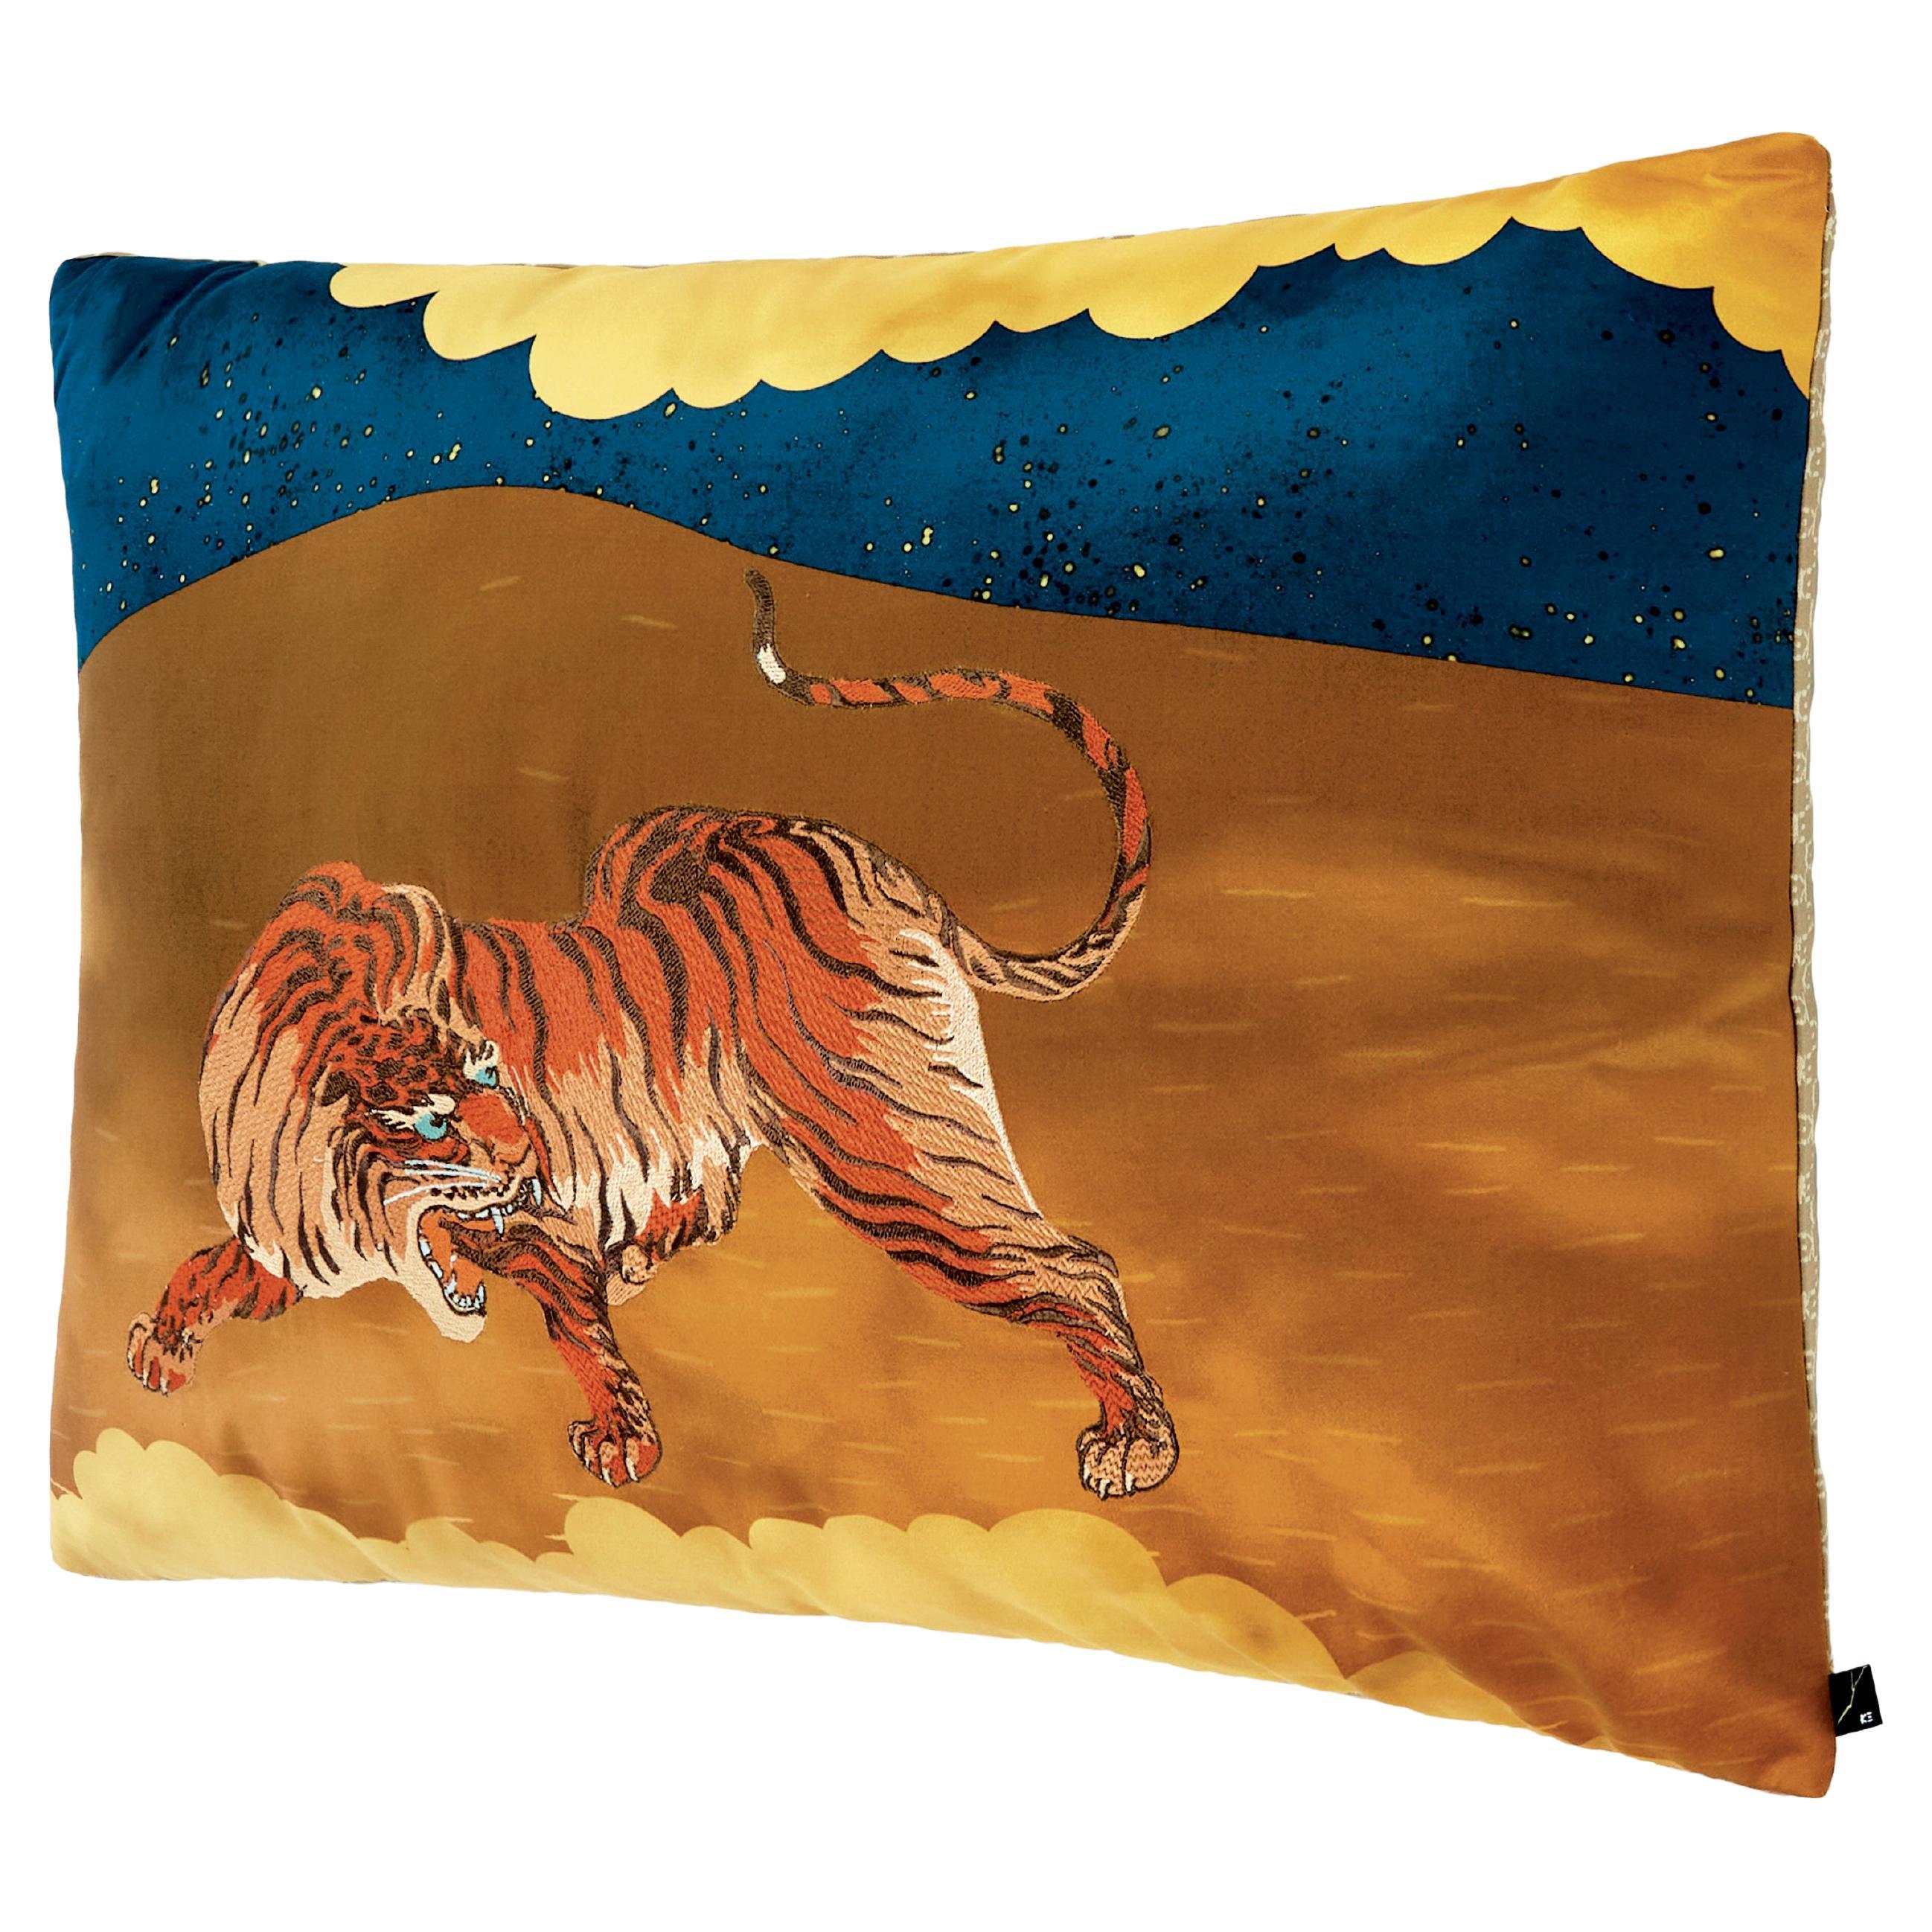 K-3 Tora (Tiger) Decorative Pillows For Sale